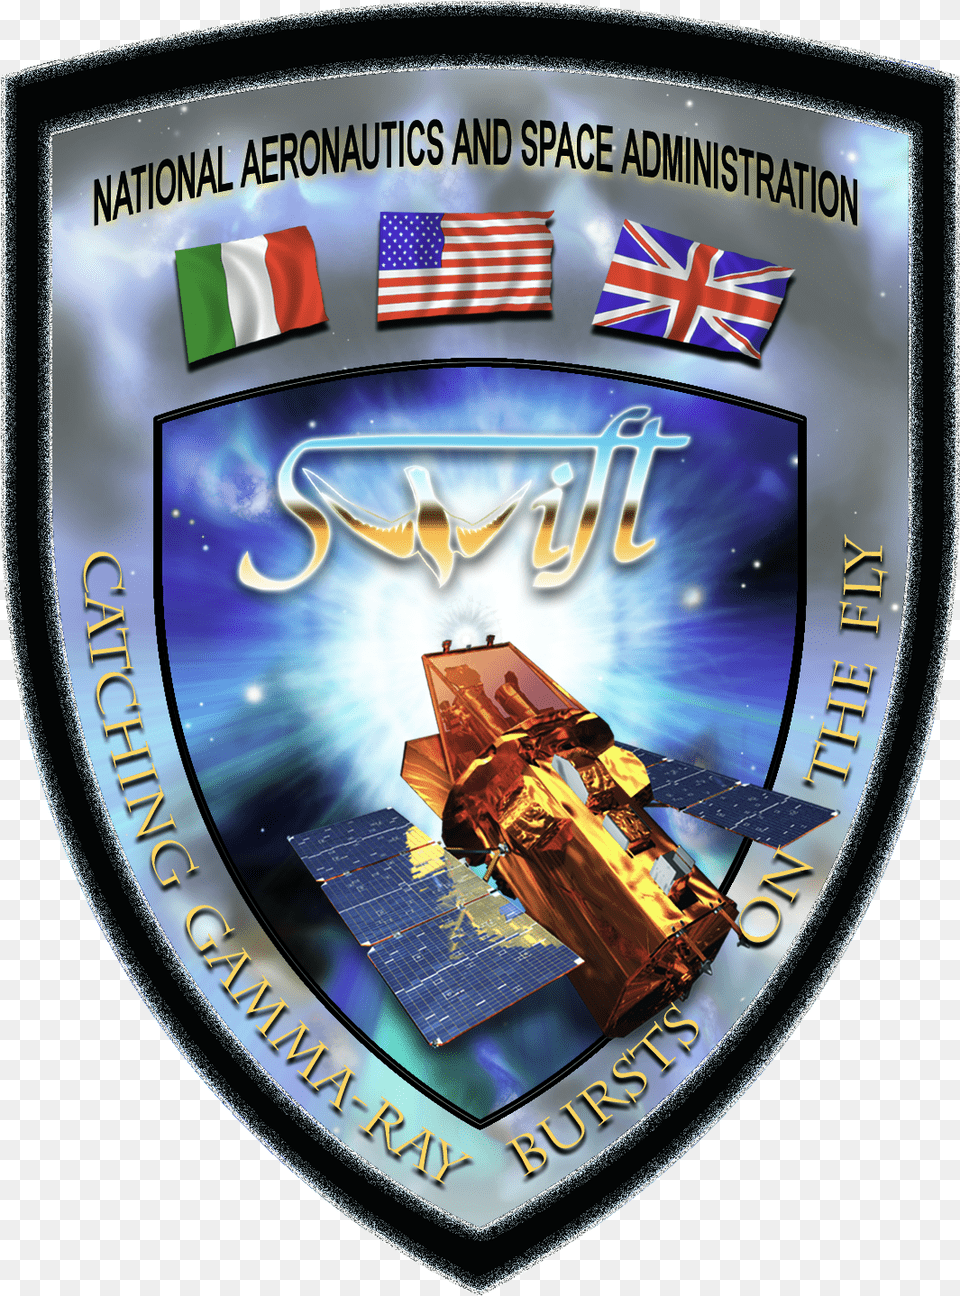 Swift Gamma Ray Burst Mission Patch Nasa Logo Mission Patch, Badge, Symbol, Emblem Png